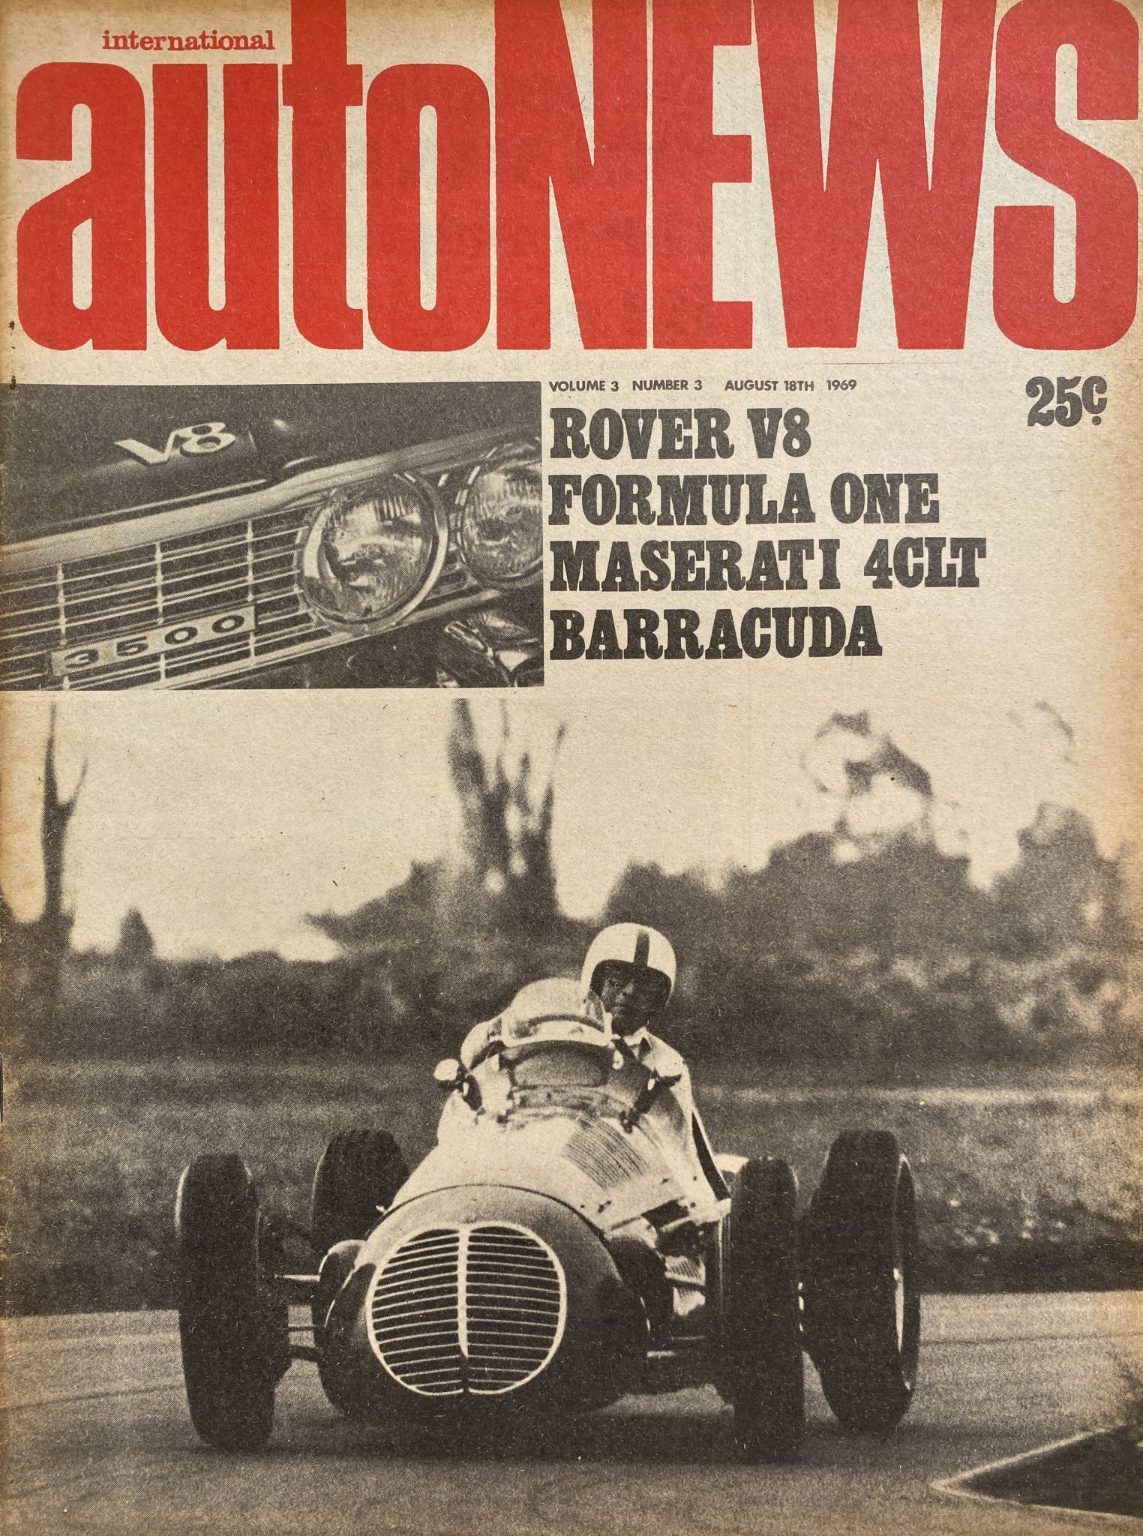 OLD MAGAZINE: International Auto News - Vol. 3, Number 3, 18th August 1969